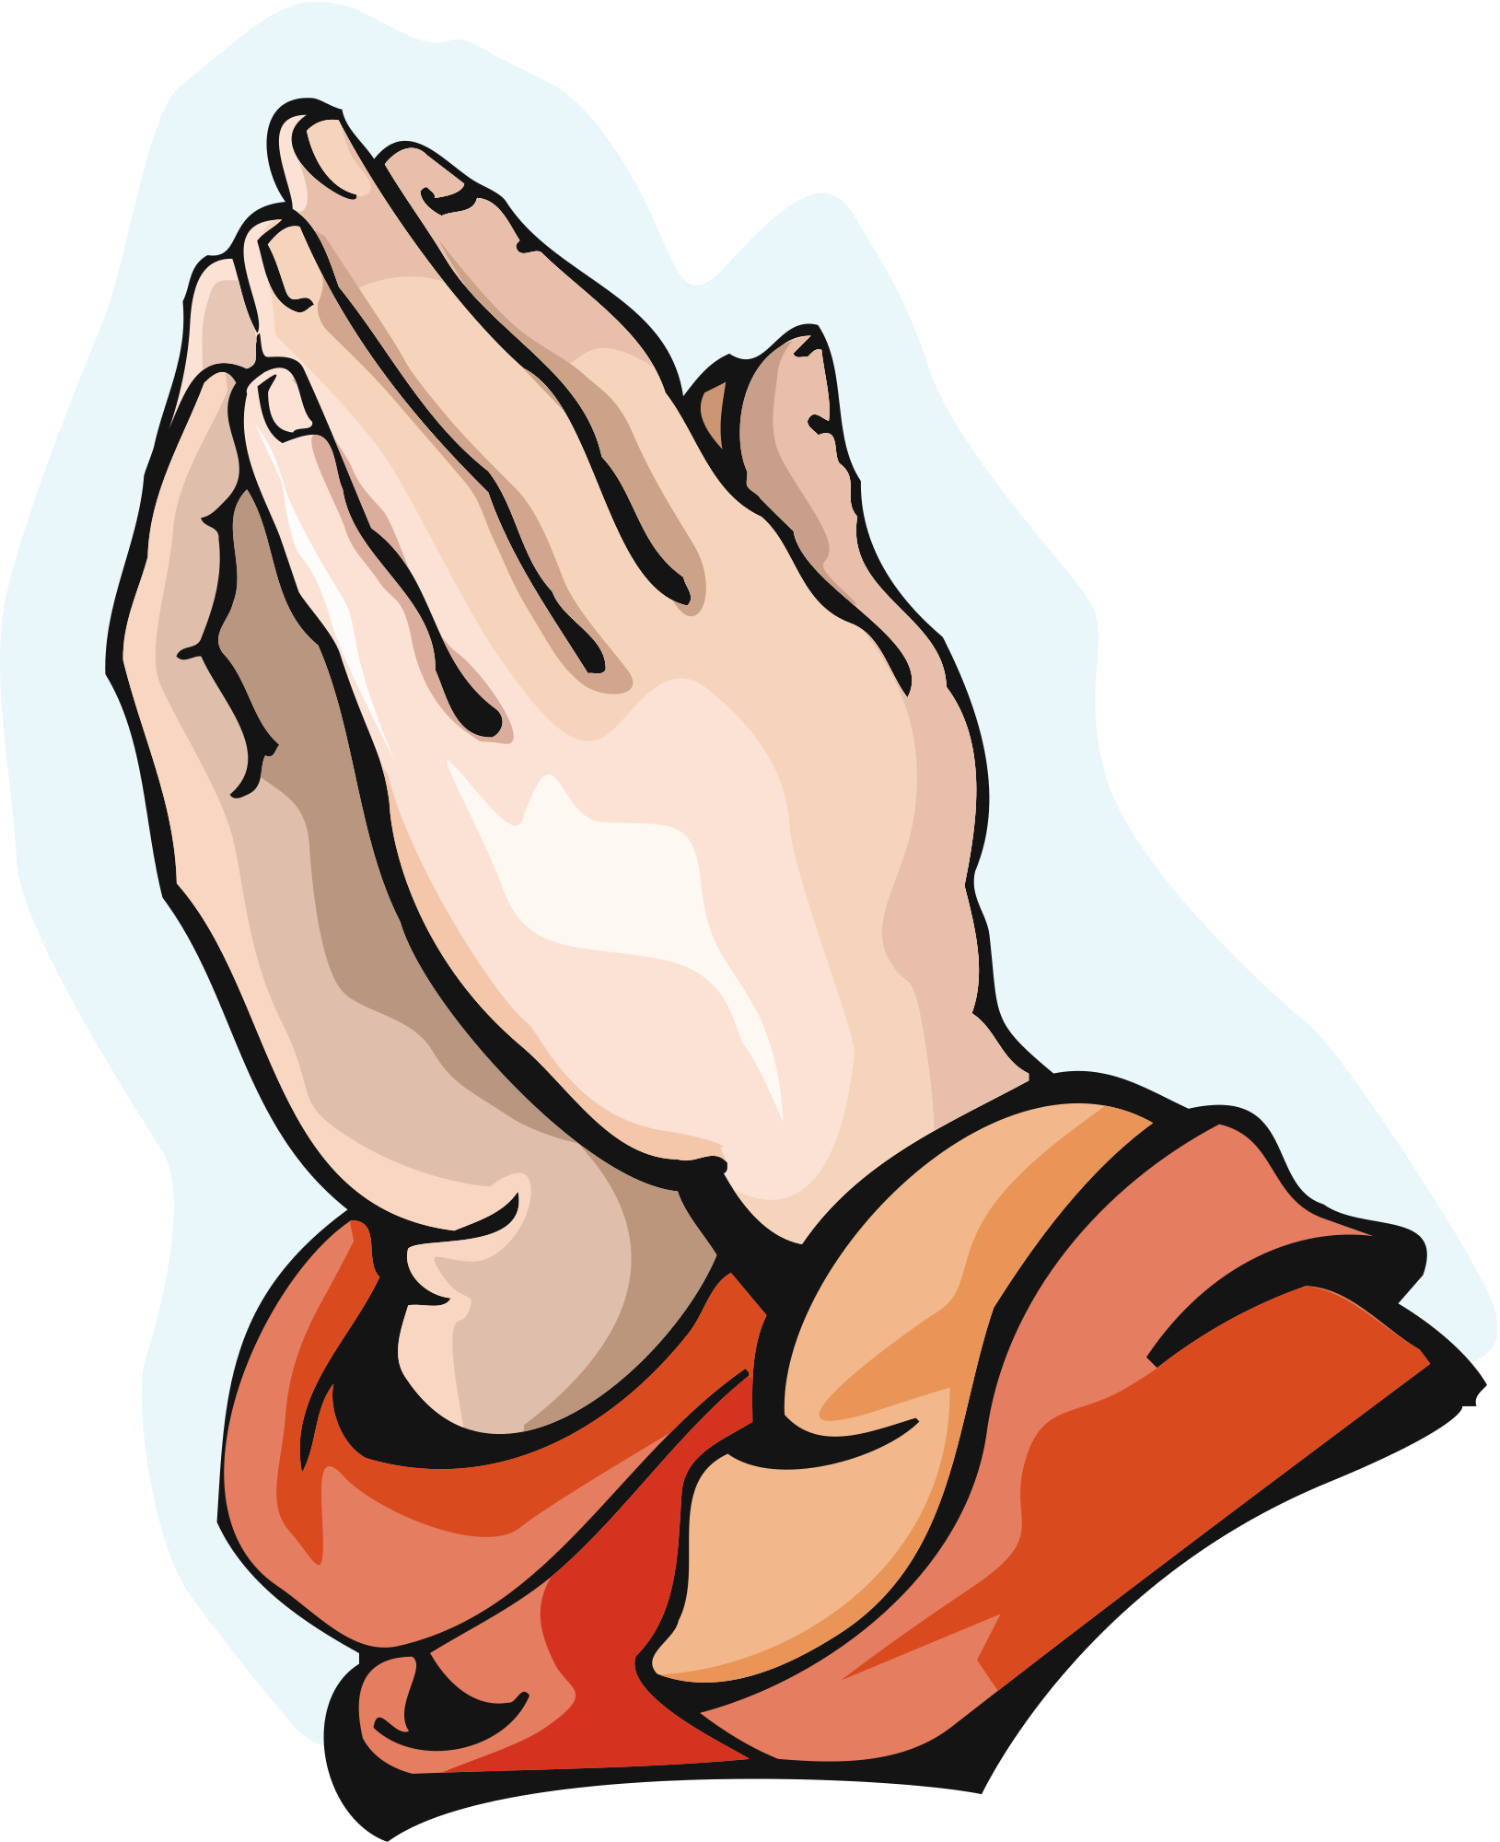 Praying hands 1 free clip art image 2 - Clipartix